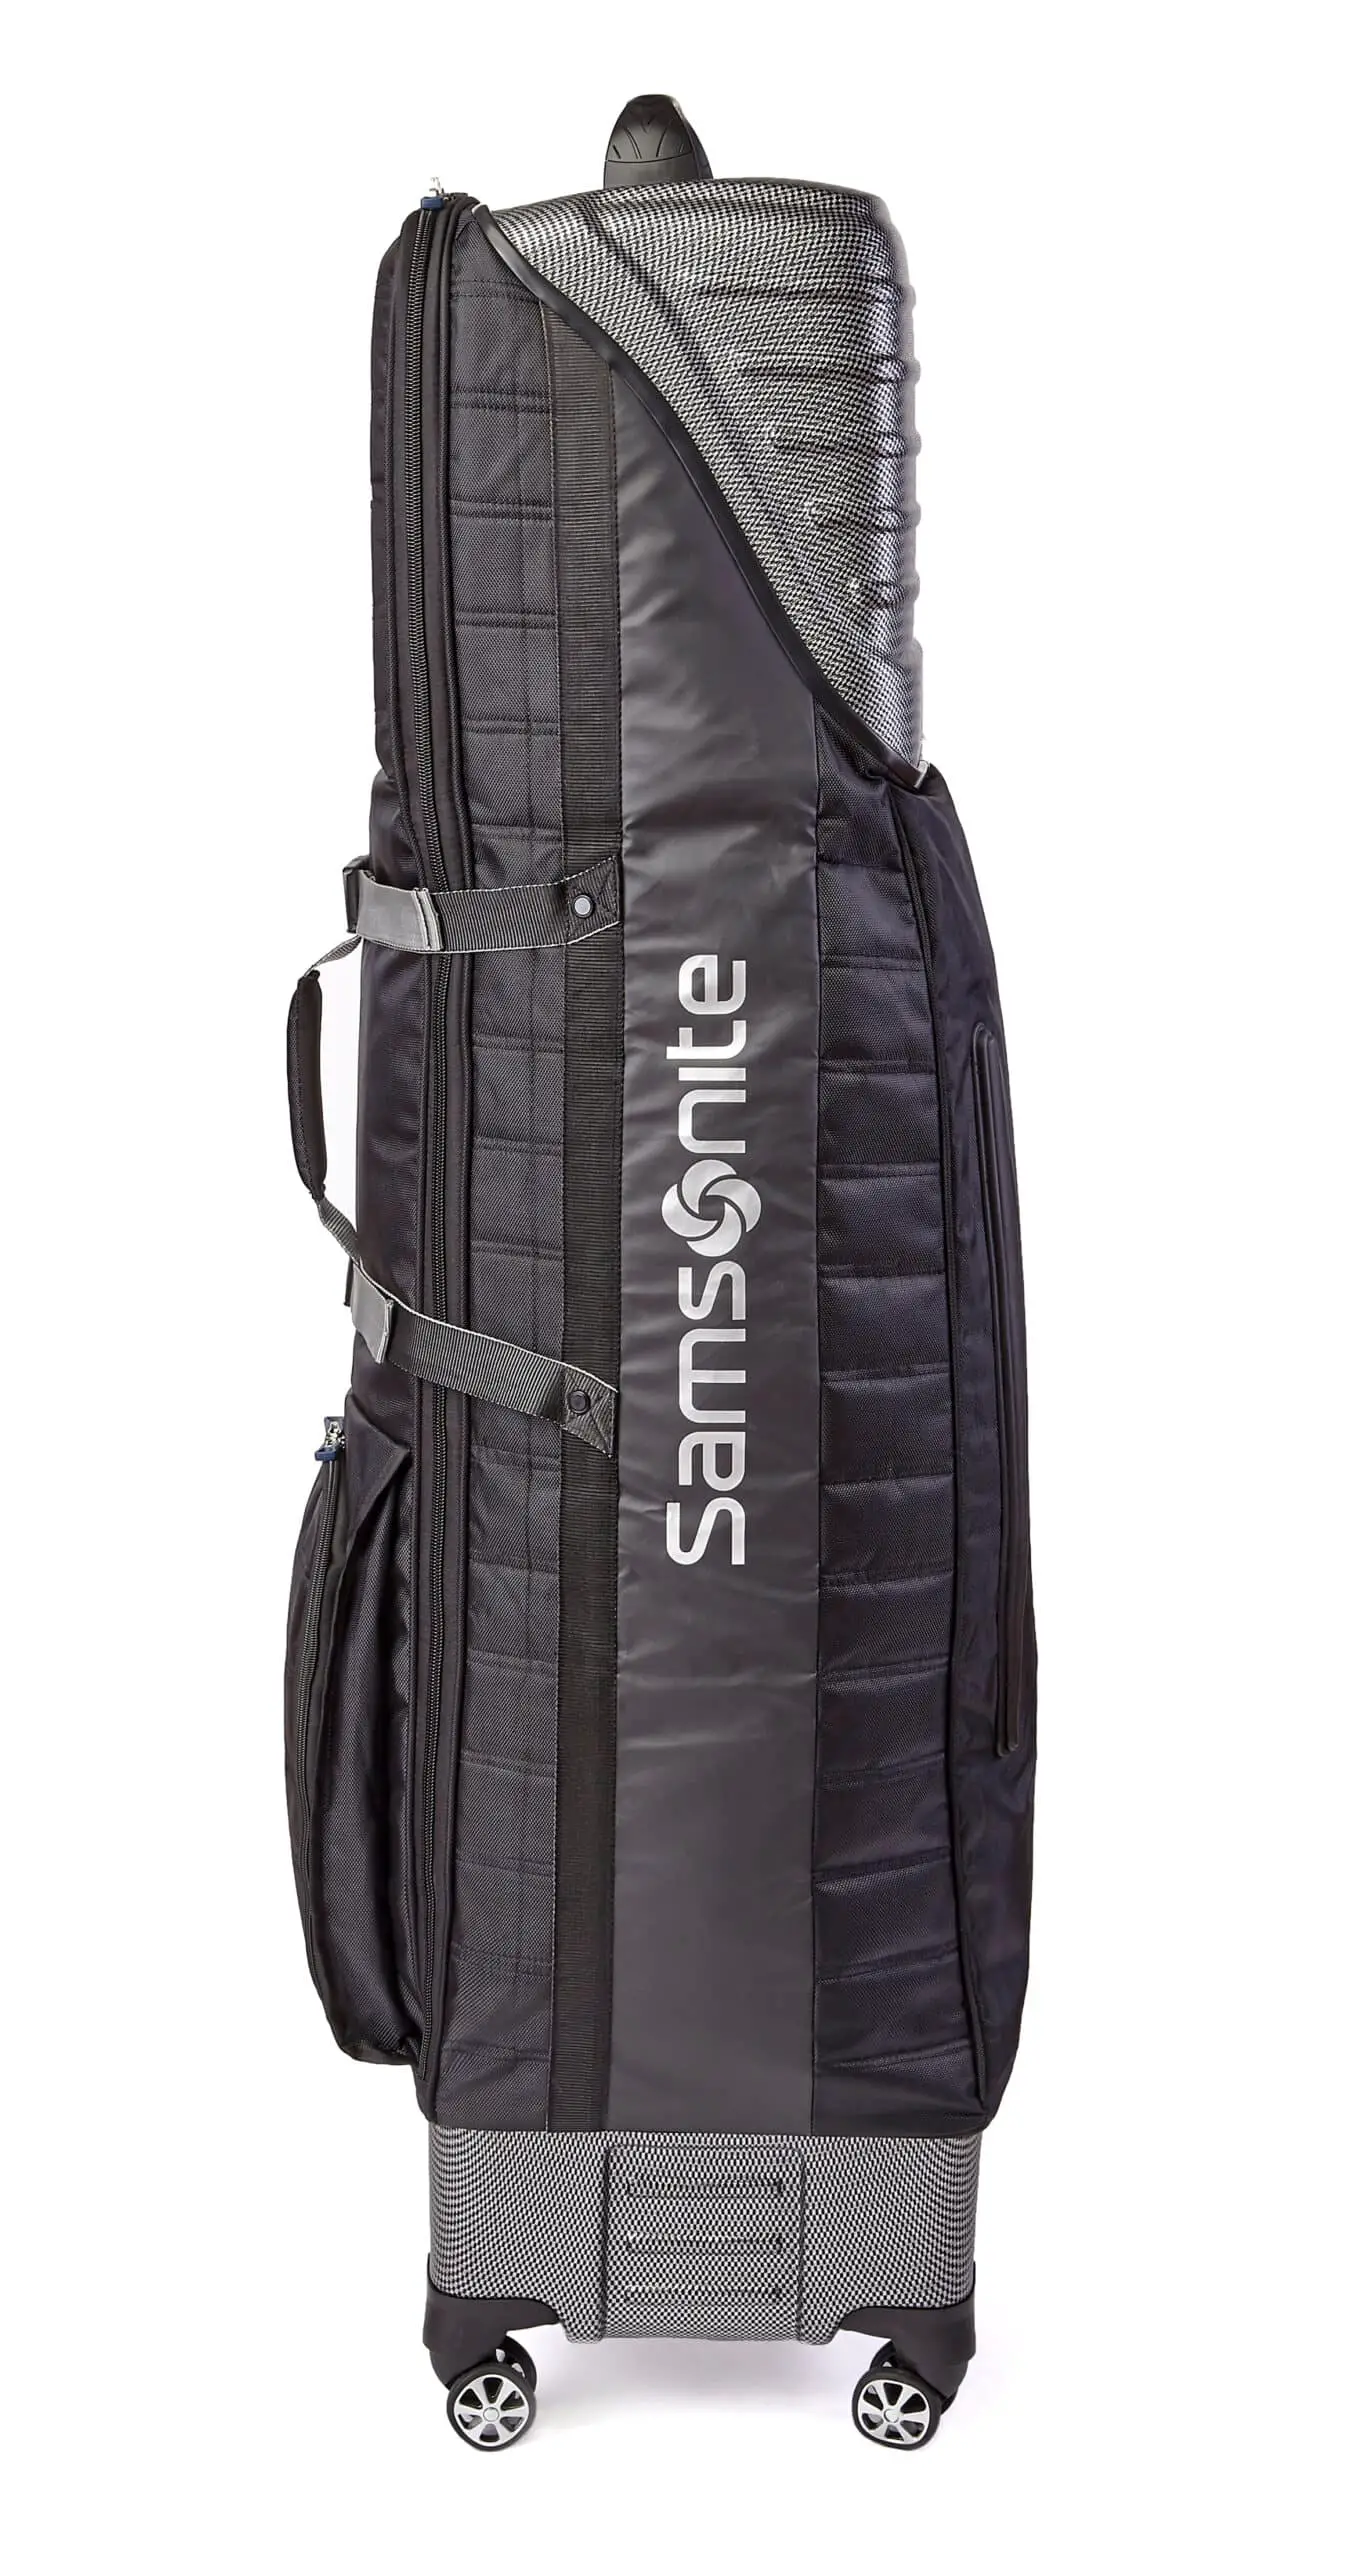 Is The Samsonite Golf Travel Bag Worth Buying?